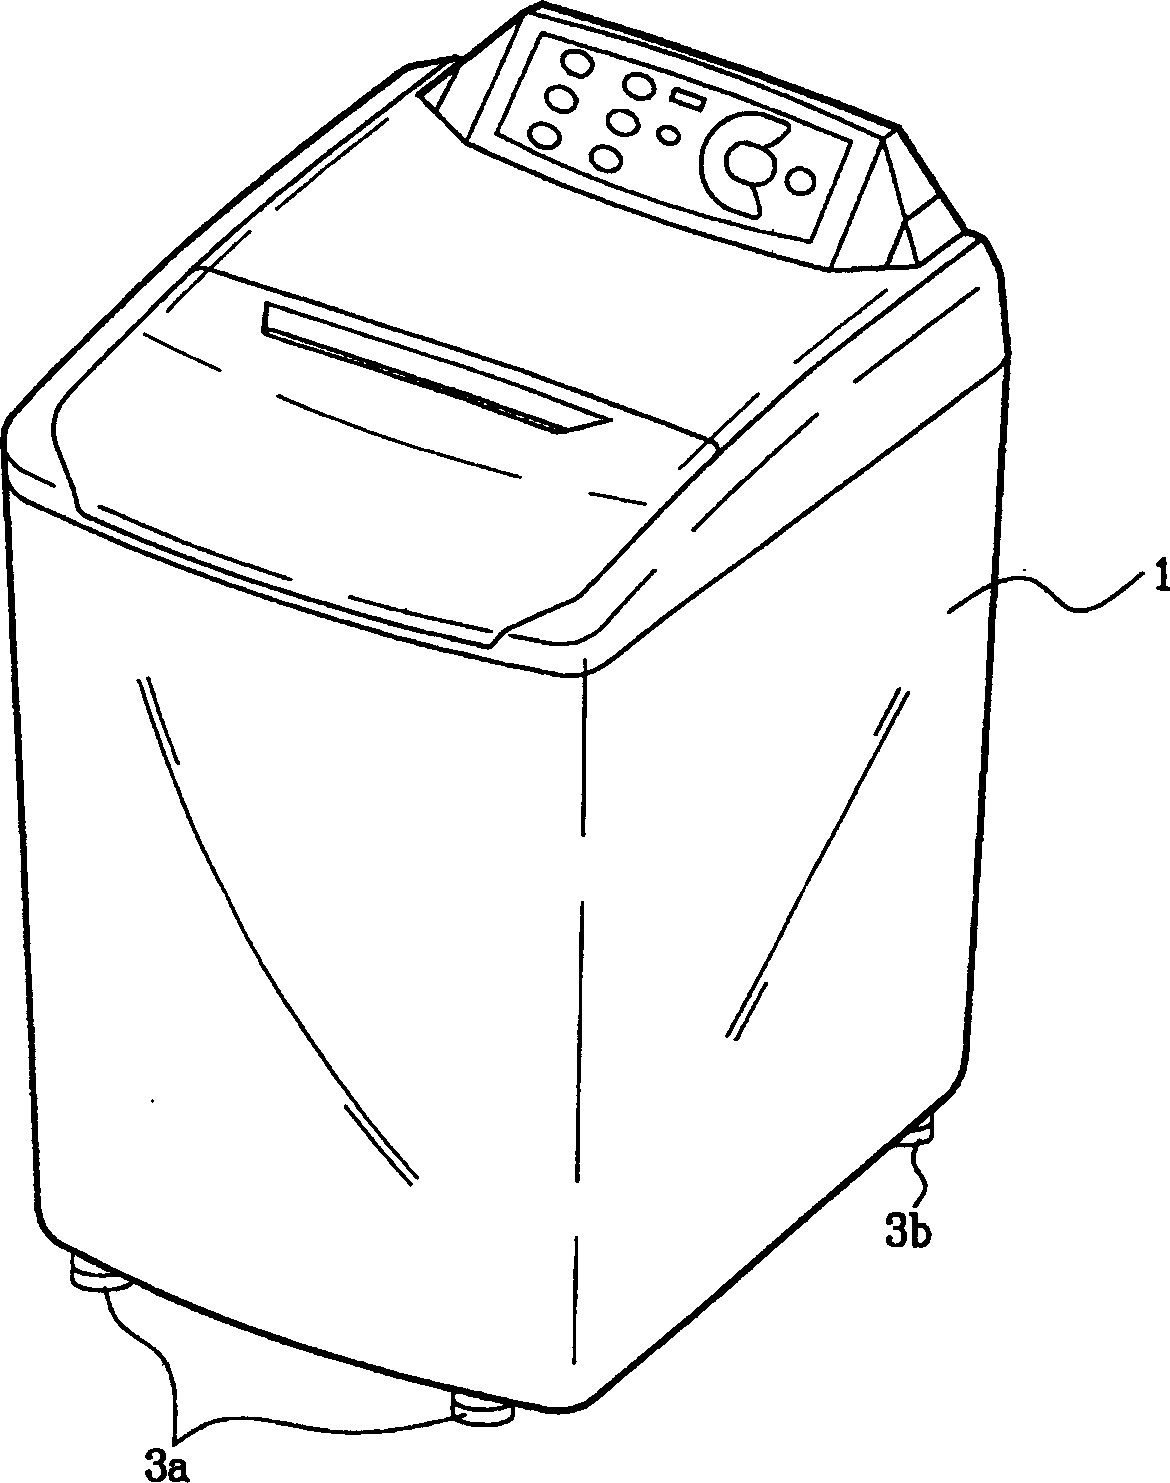 Automatic leveling device for washing machine